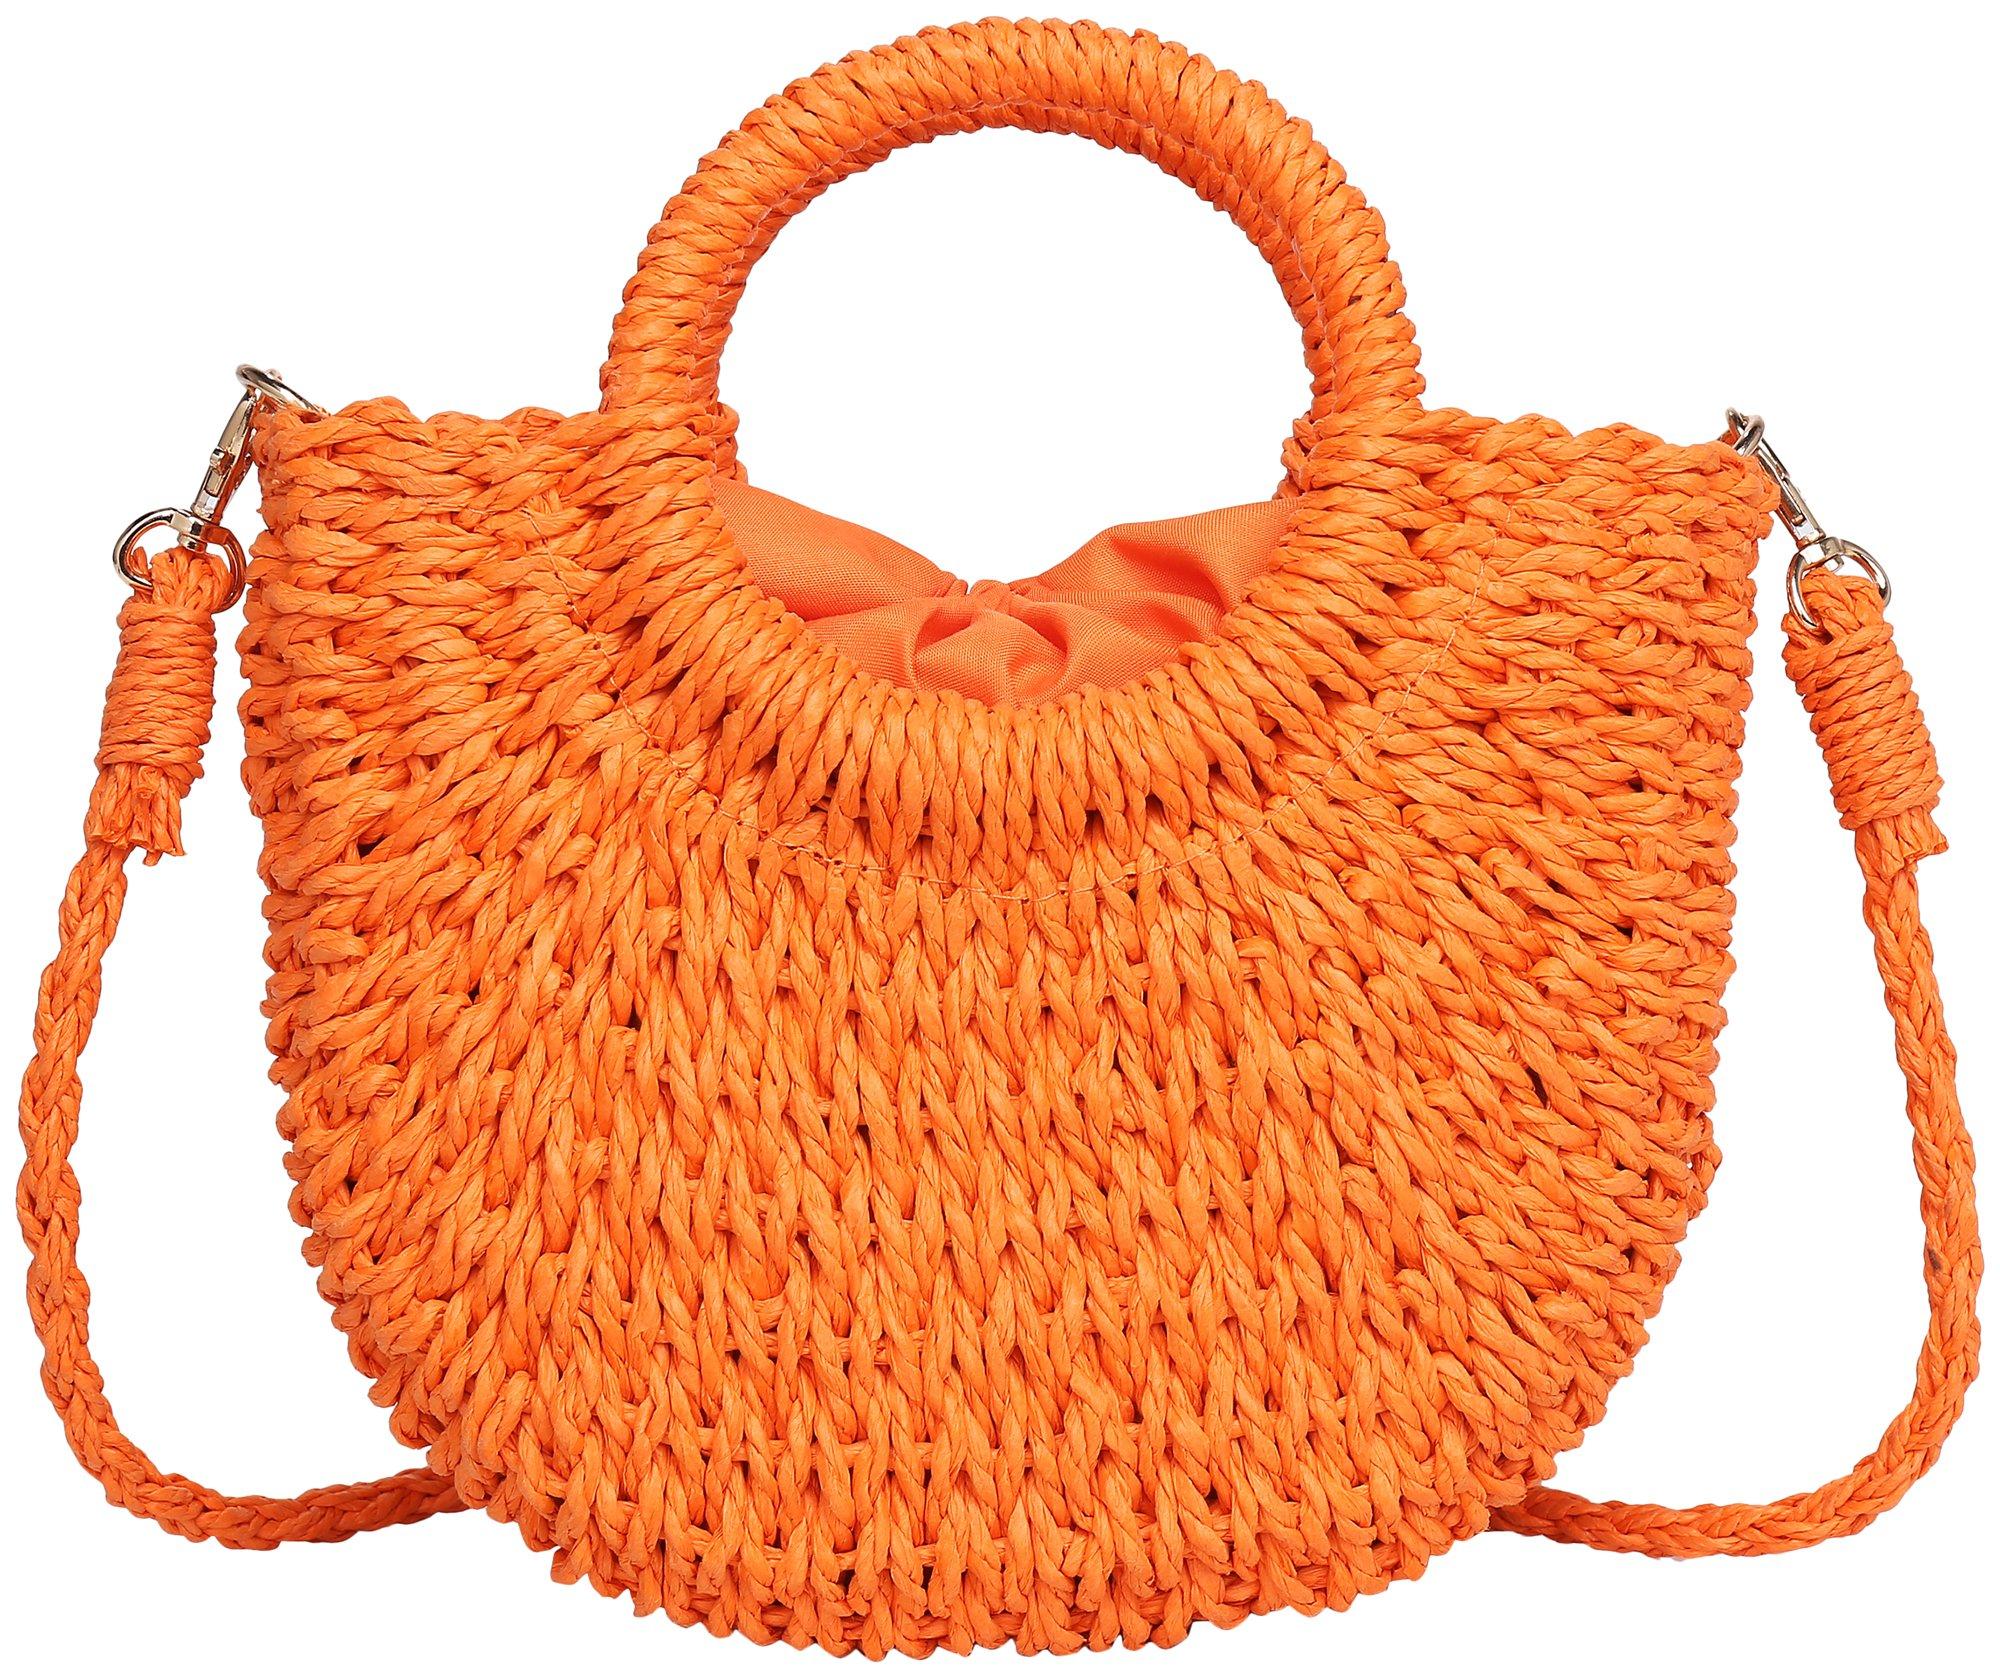 Urban Expressions Zara Woven Crossbody Handbag